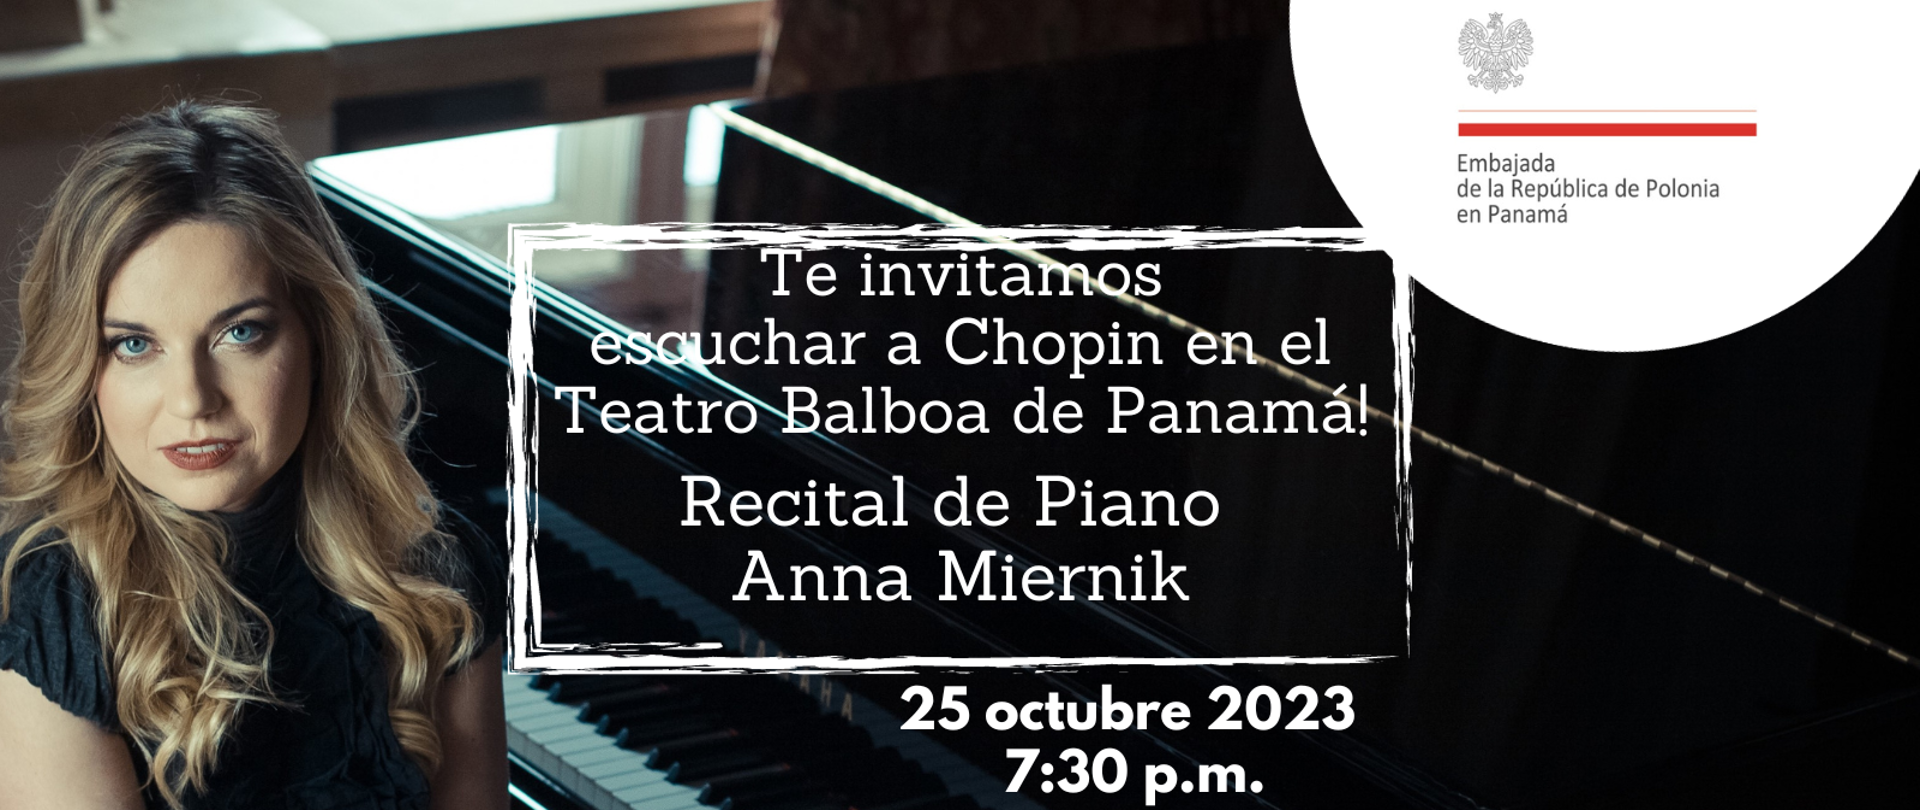 Recital_de_piano_Anna_Miernik_panama